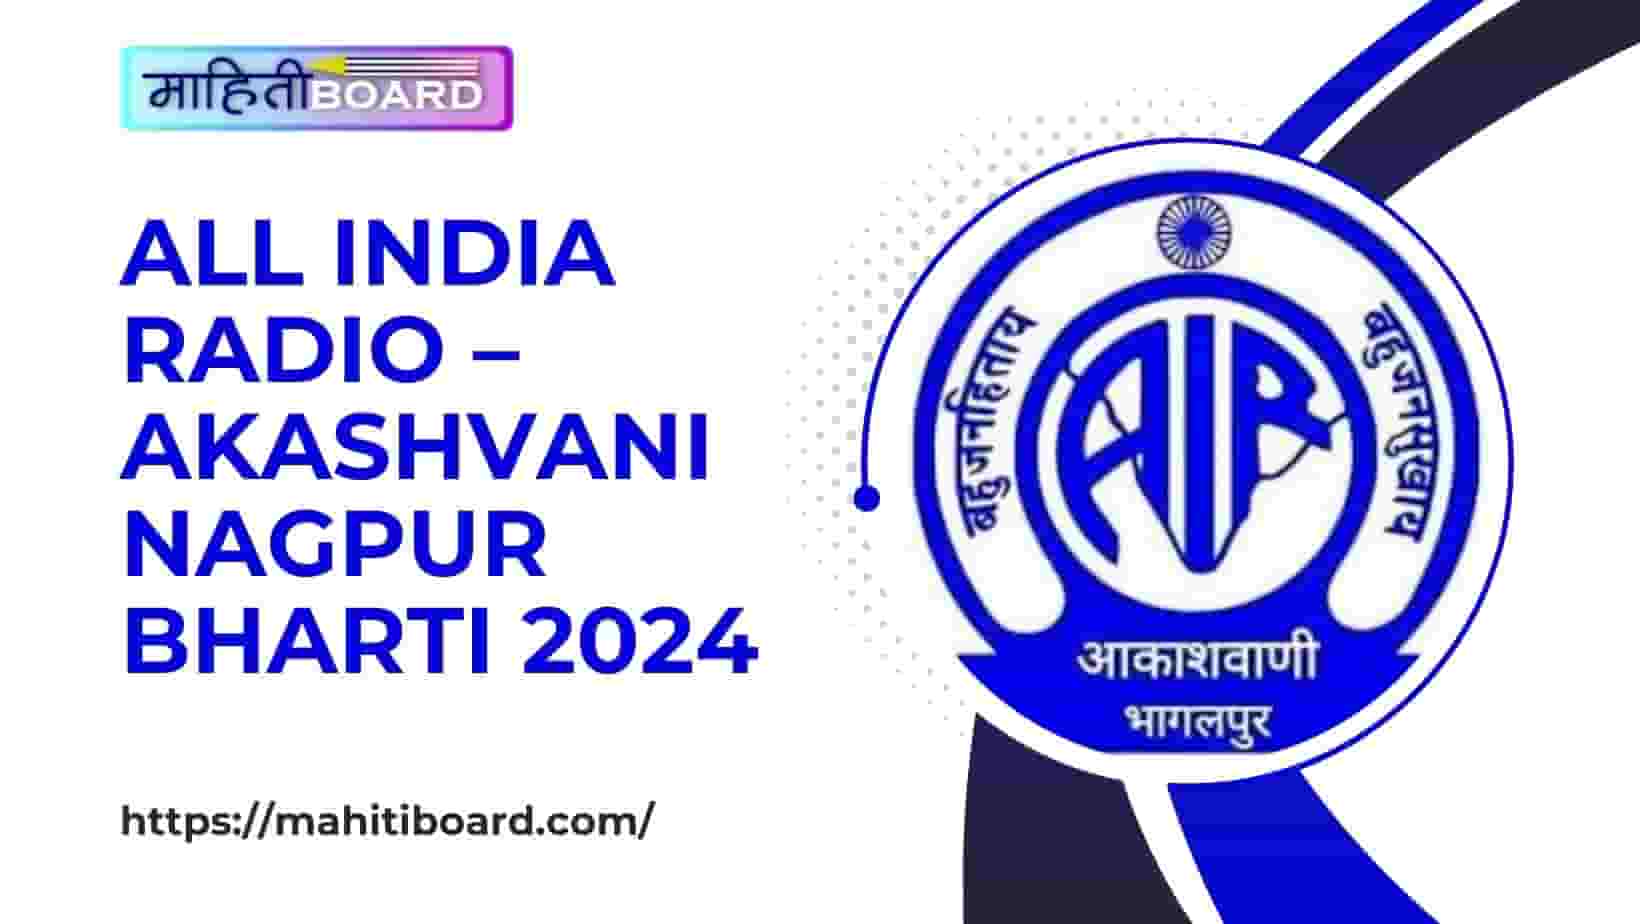 All India Radio – Akashvani Nagpur Bharti 2024